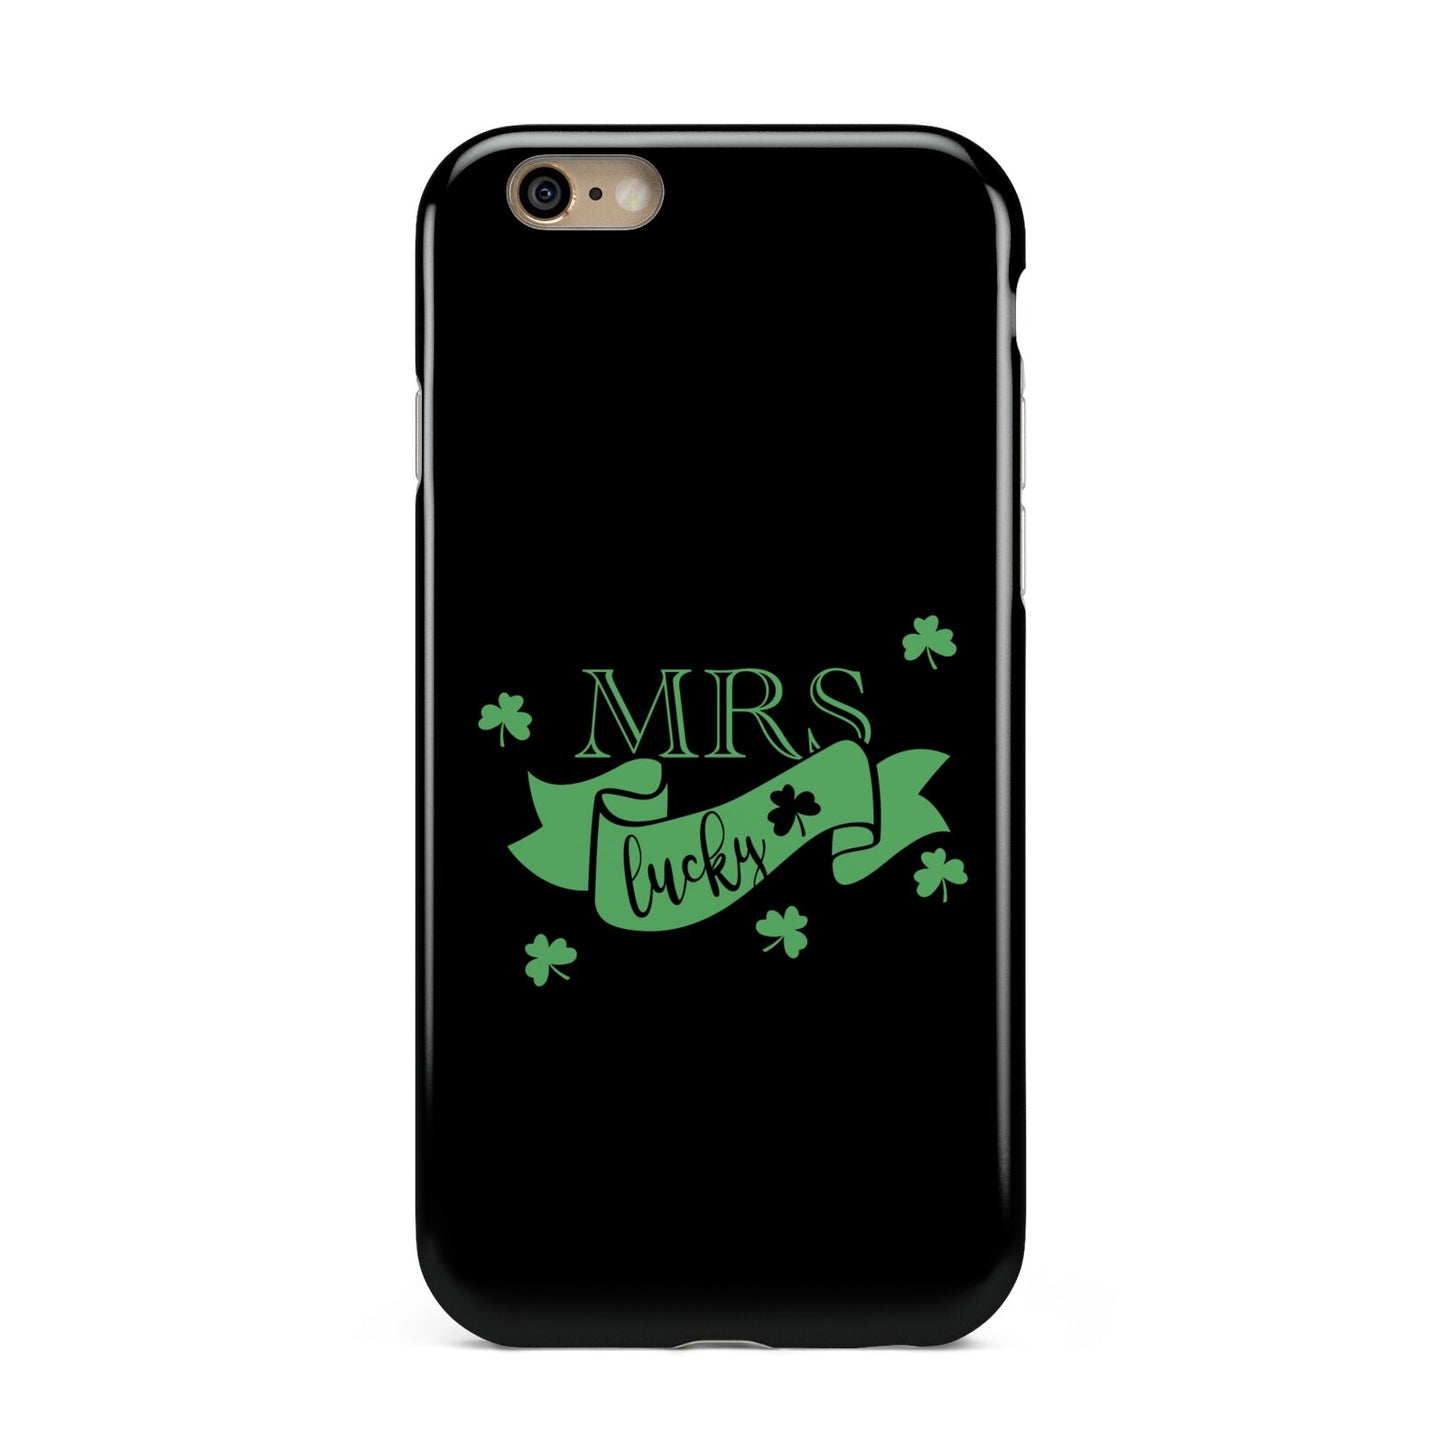 Mrs Lucky Apple iPhone 6 3D Tough Case